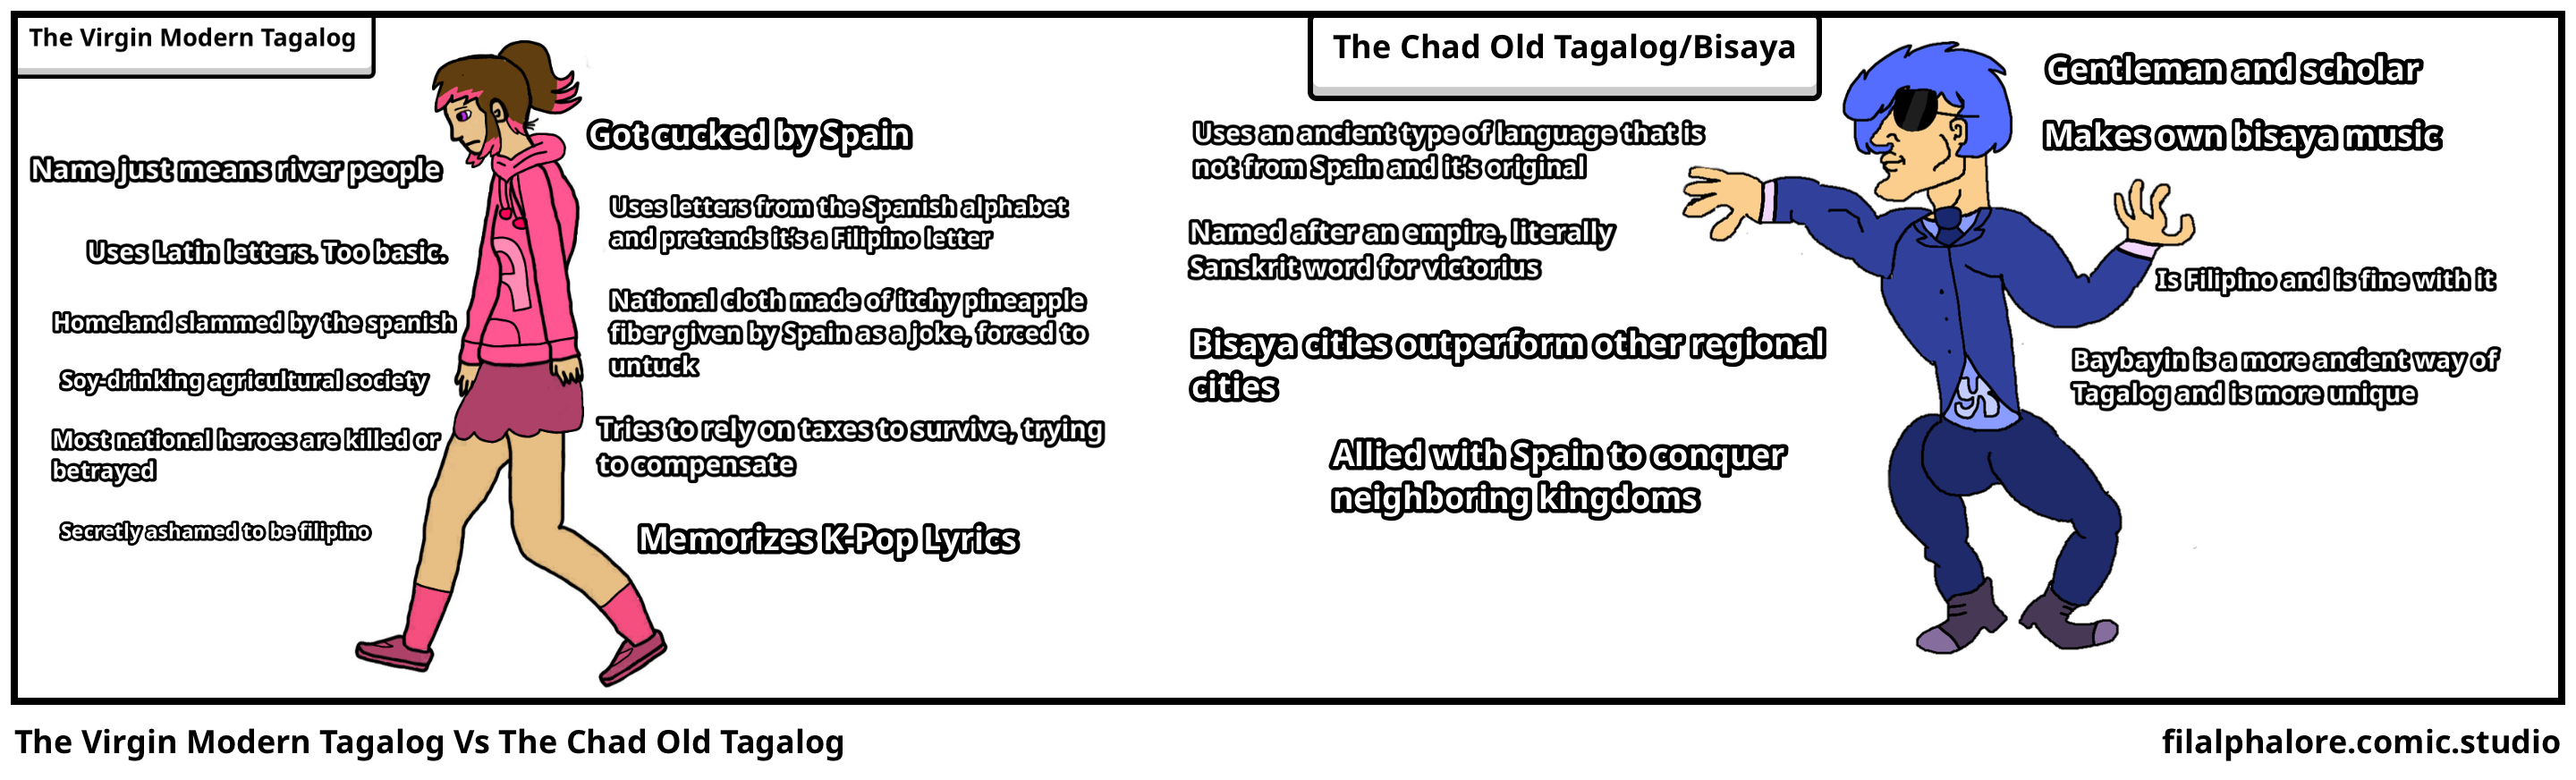 The Virgin Modern Tagalog Vs The Chad Old Tagalog